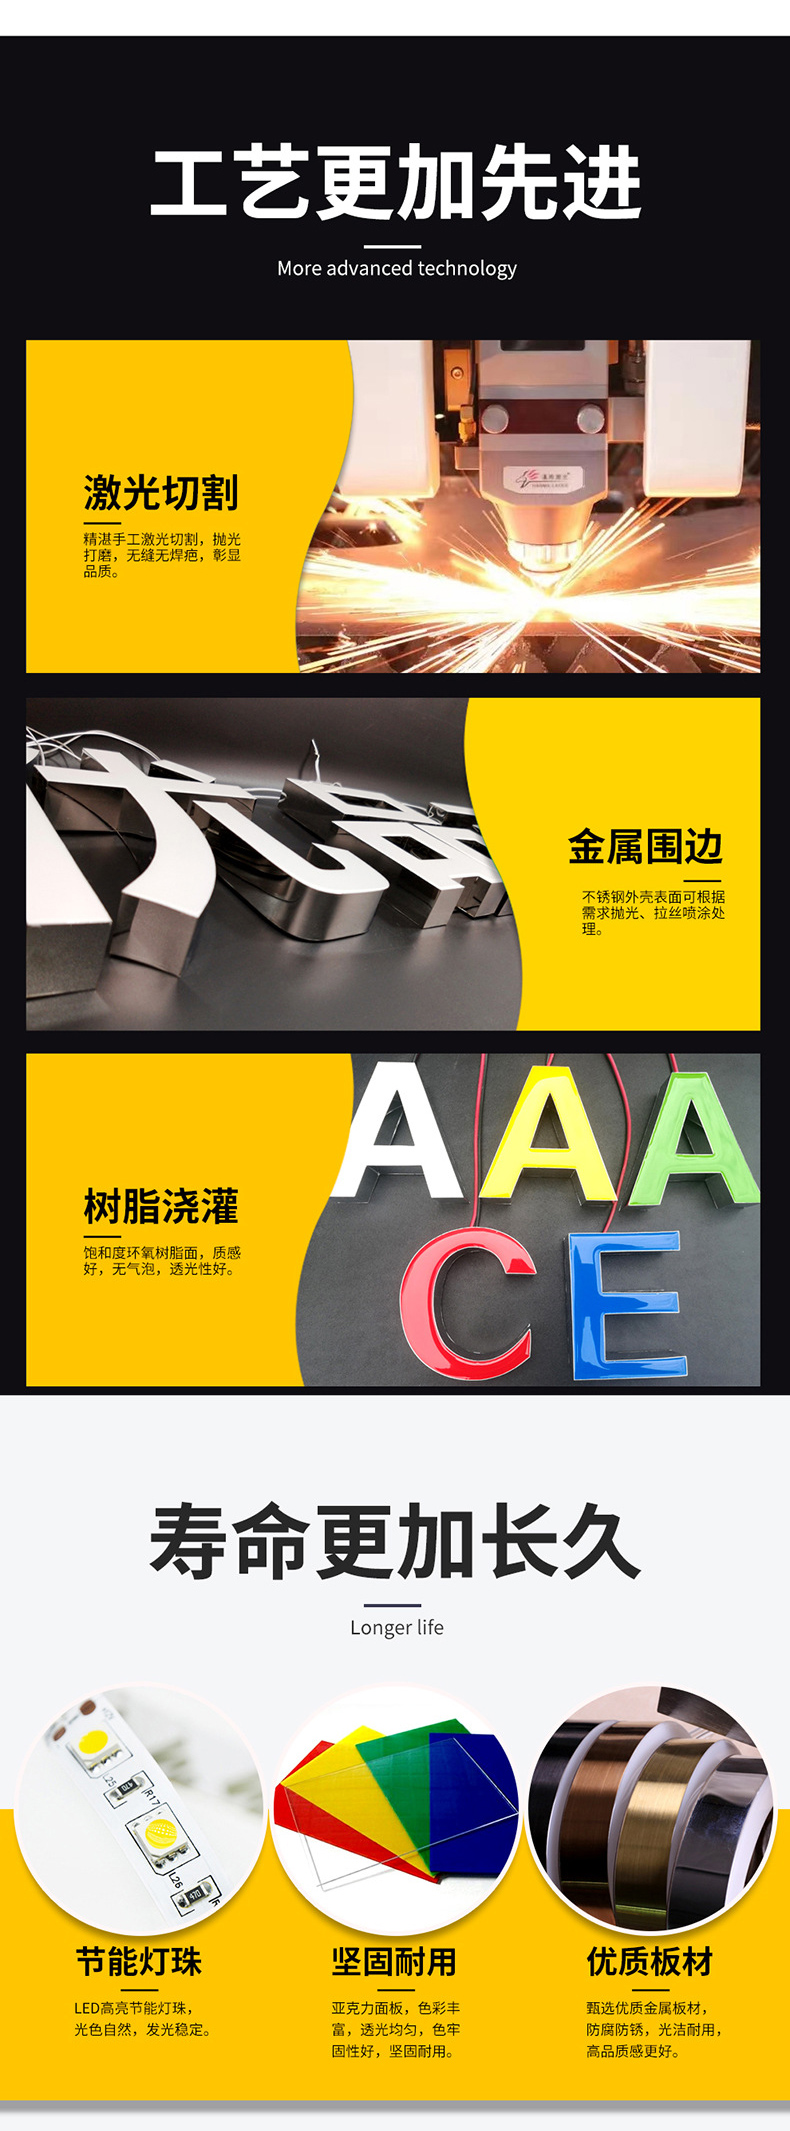 Resin luminous character doorhead manufacturer LED outdoor advertising luminous sign character processing customized Yaxing